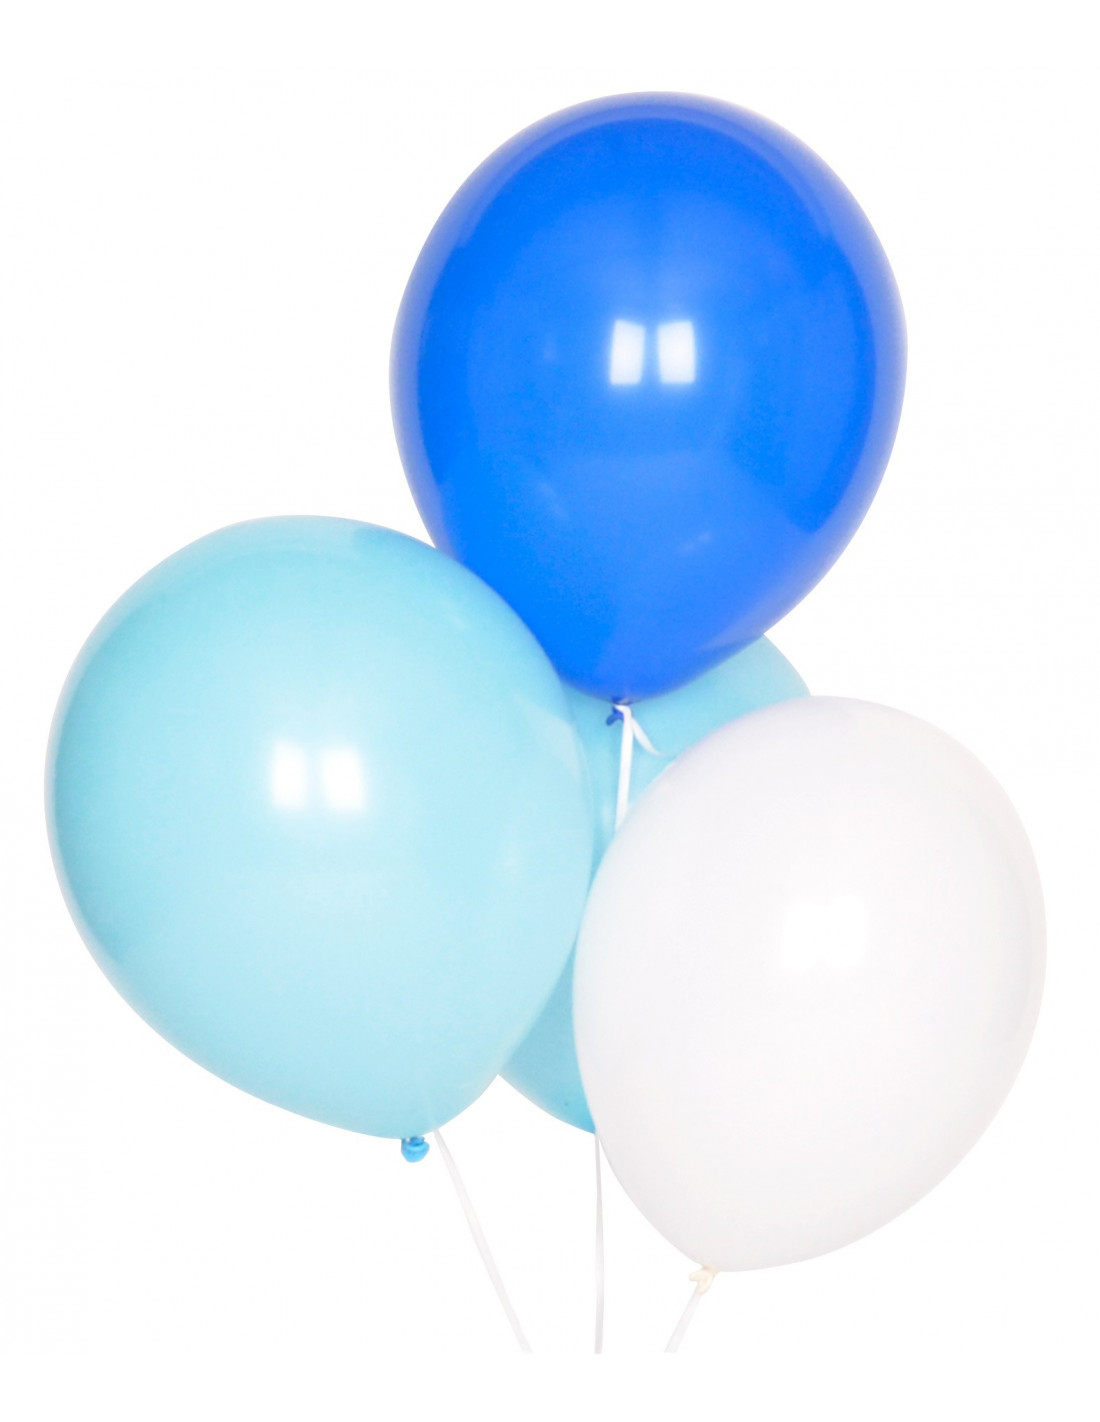 Lot de 10 ballons BLEU et OR. 5 ballons bleu foncé métallique et 5